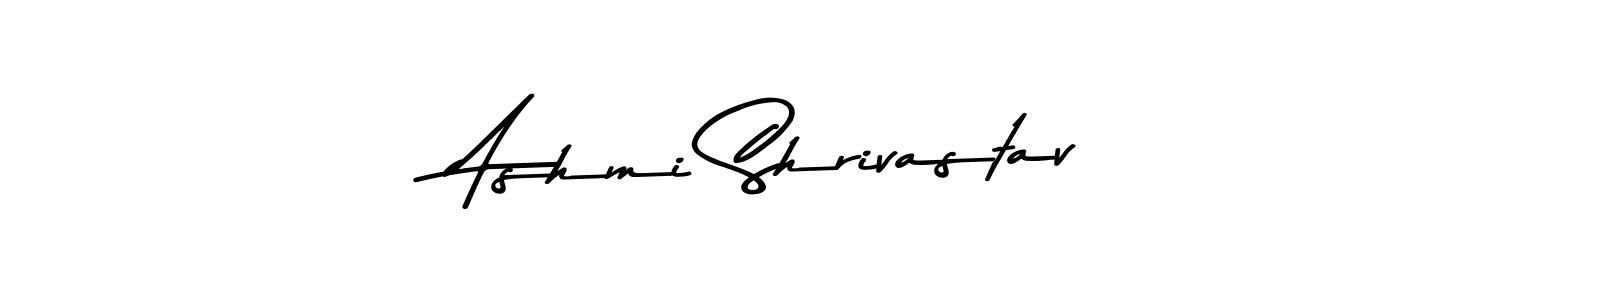 How to Draw Ashmi Shrivastav signature style? Asem Kandis PERSONAL USE is a latest design signature styles for name Ashmi Shrivastav. Ashmi Shrivastav signature style 9 images and pictures png